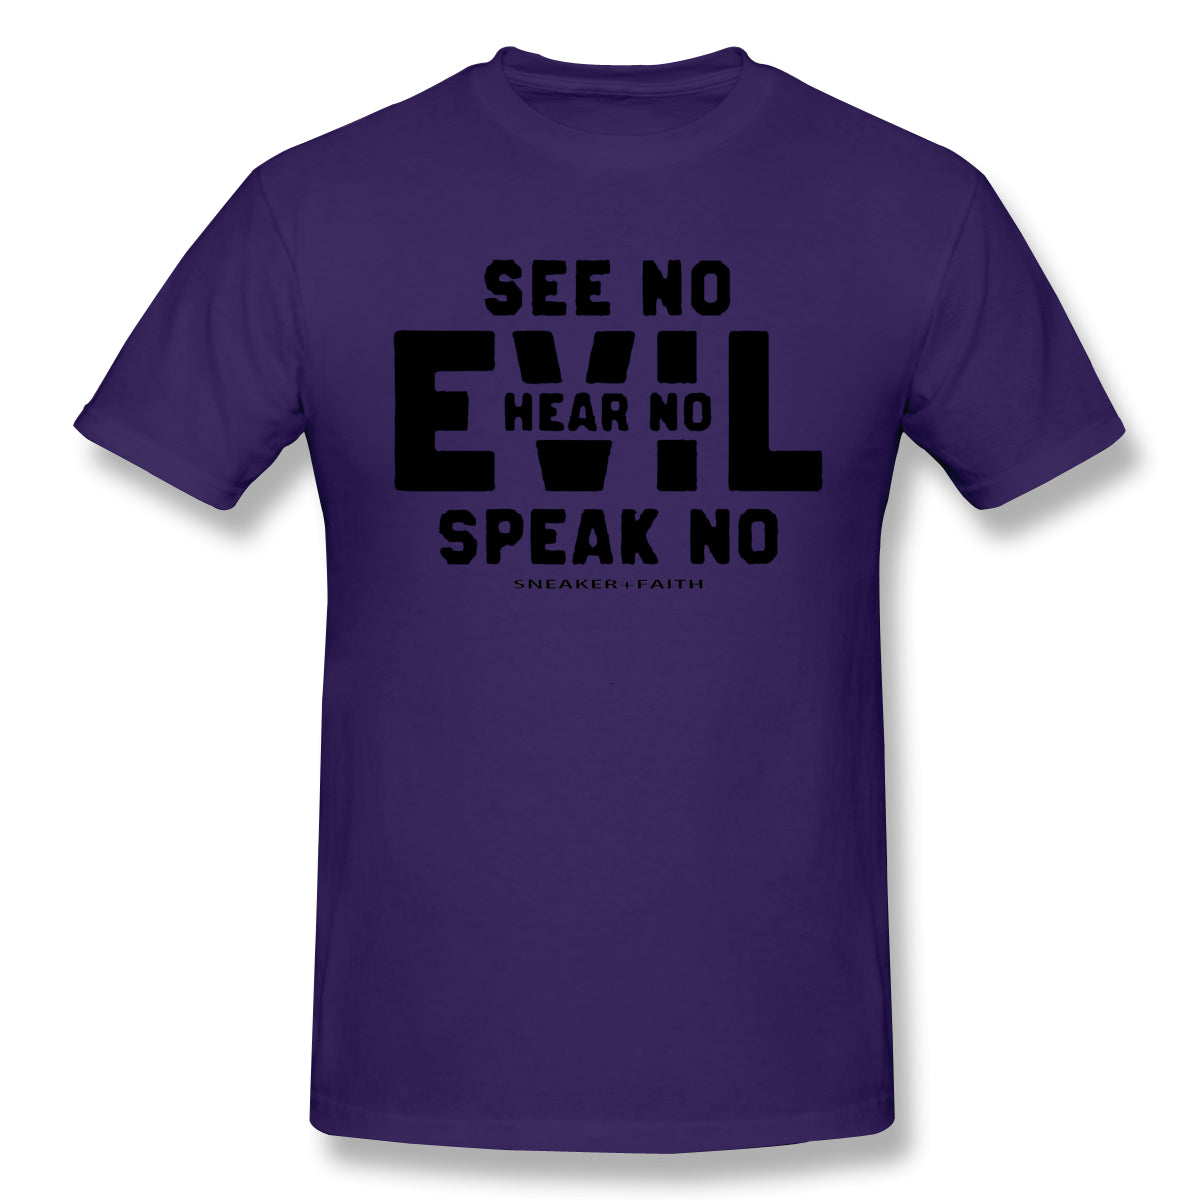 Air Jordan 1 Court Purple 1s Sneaker Tee Evil See No Hear No Speak No t Shirt For Man